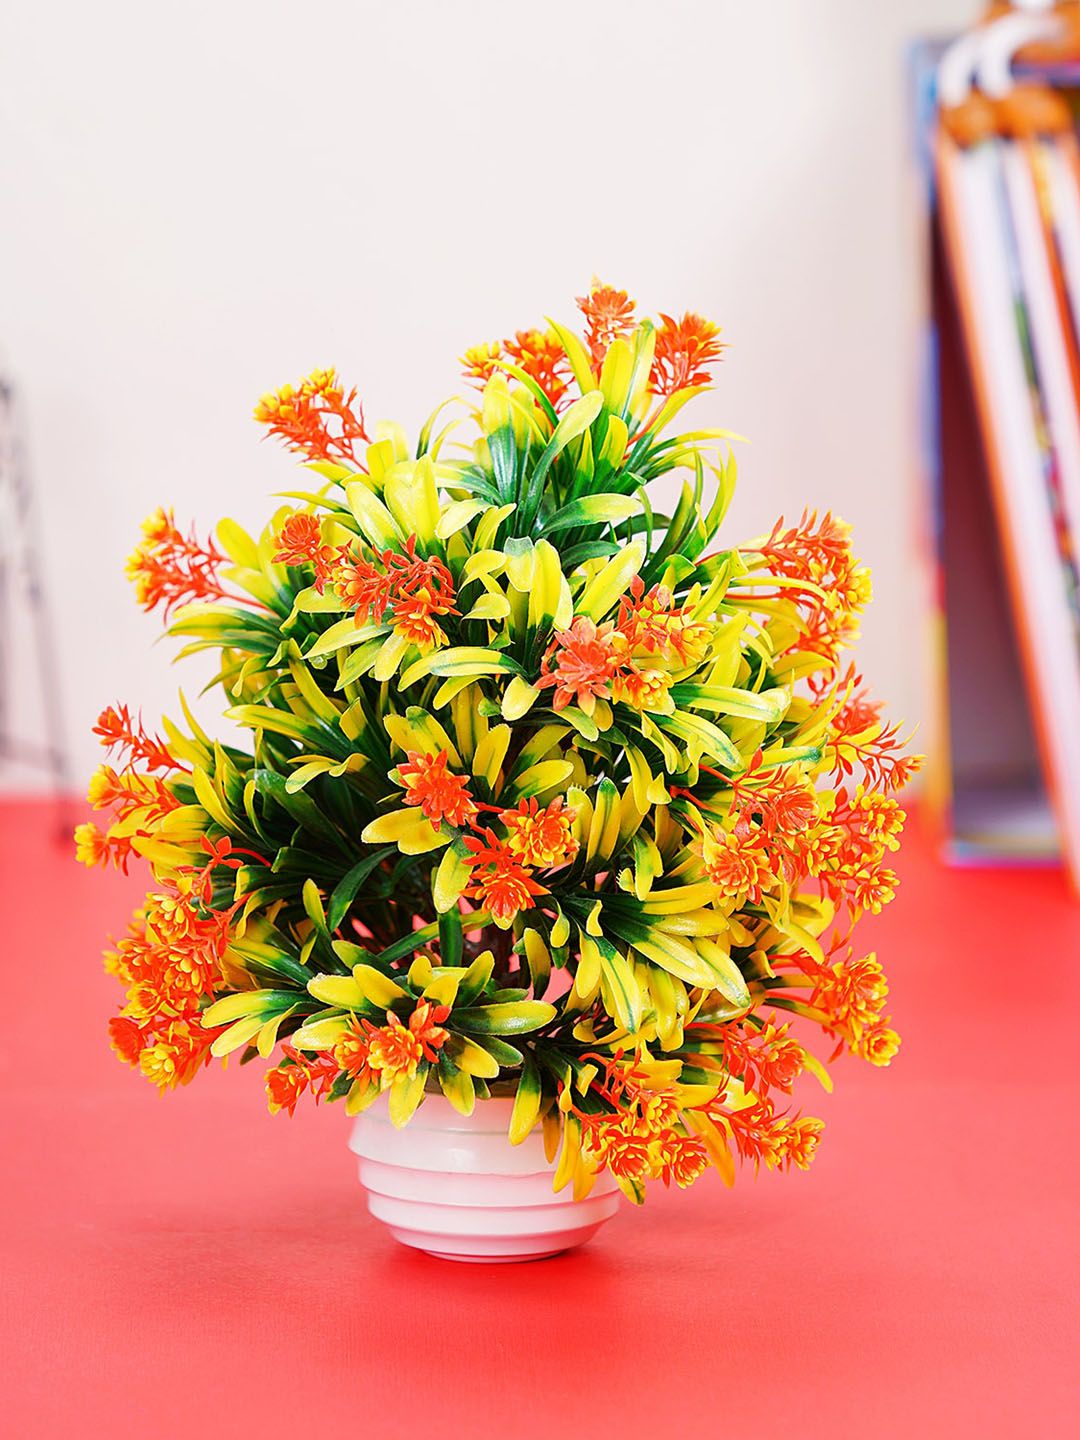 Dekorly Artificial Orange-Yellow Wild Bonsai Plants With Vintage Pot for Home Decor Price in India